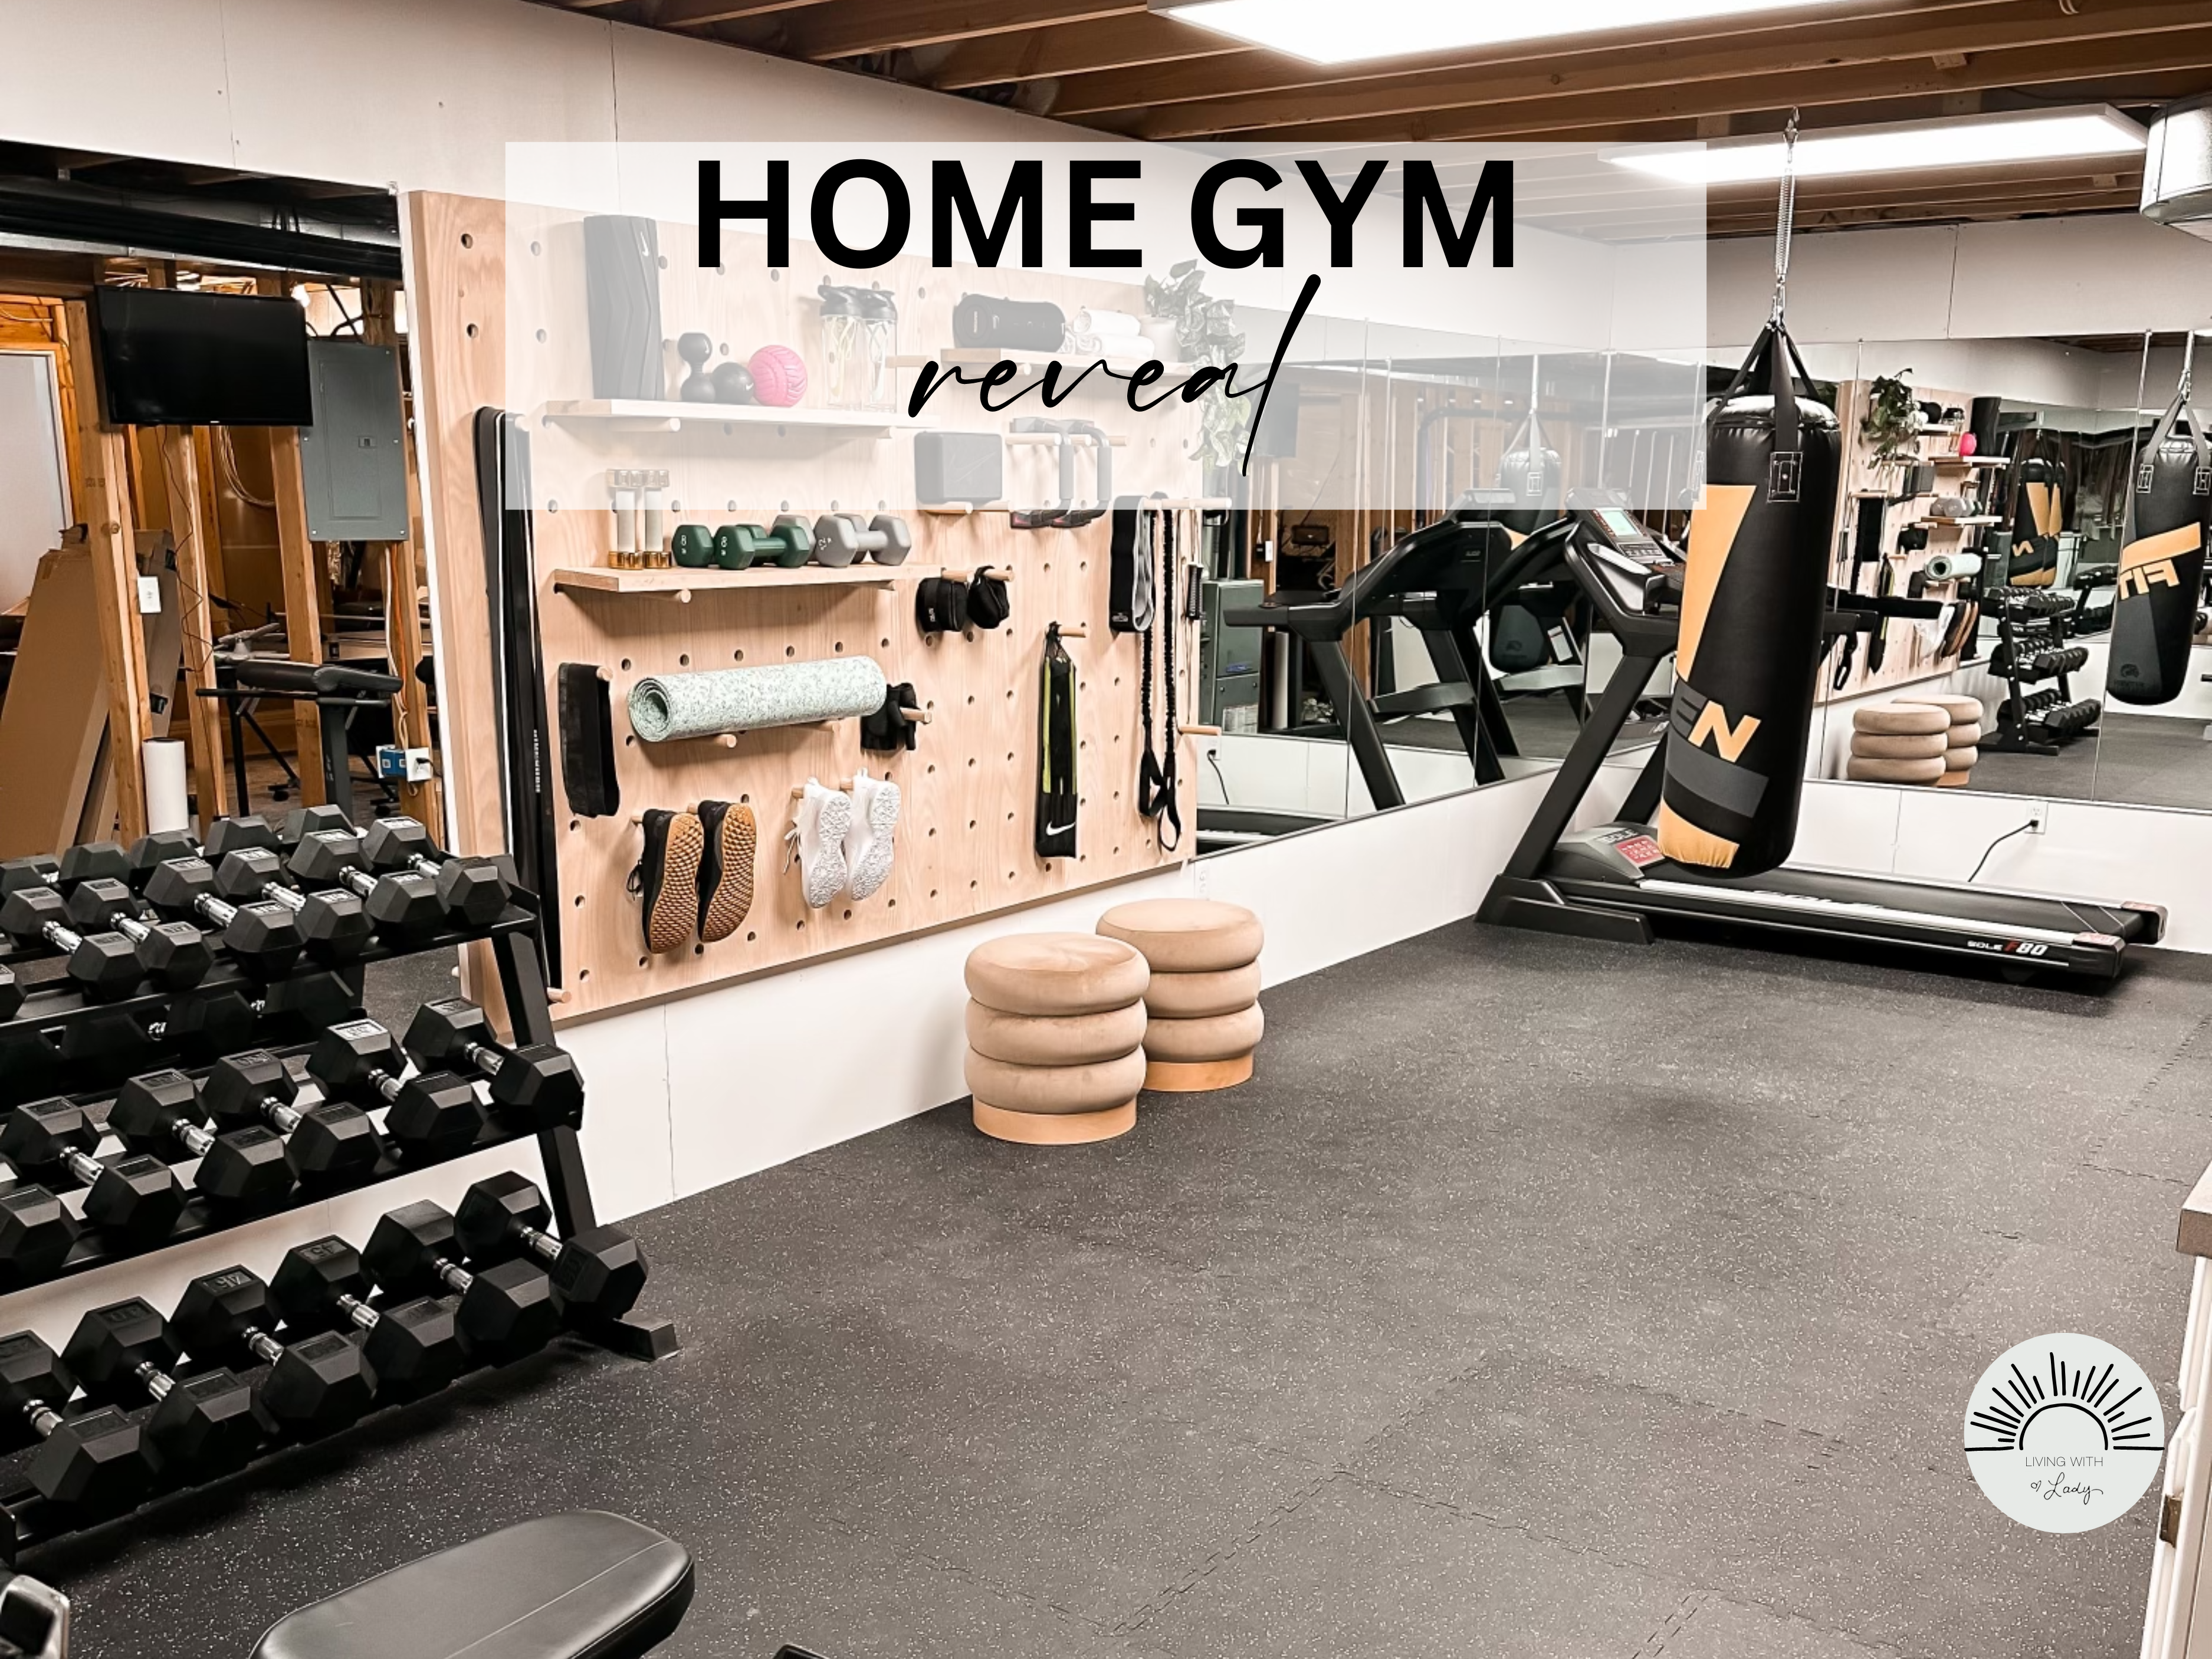  Home Gym Storage